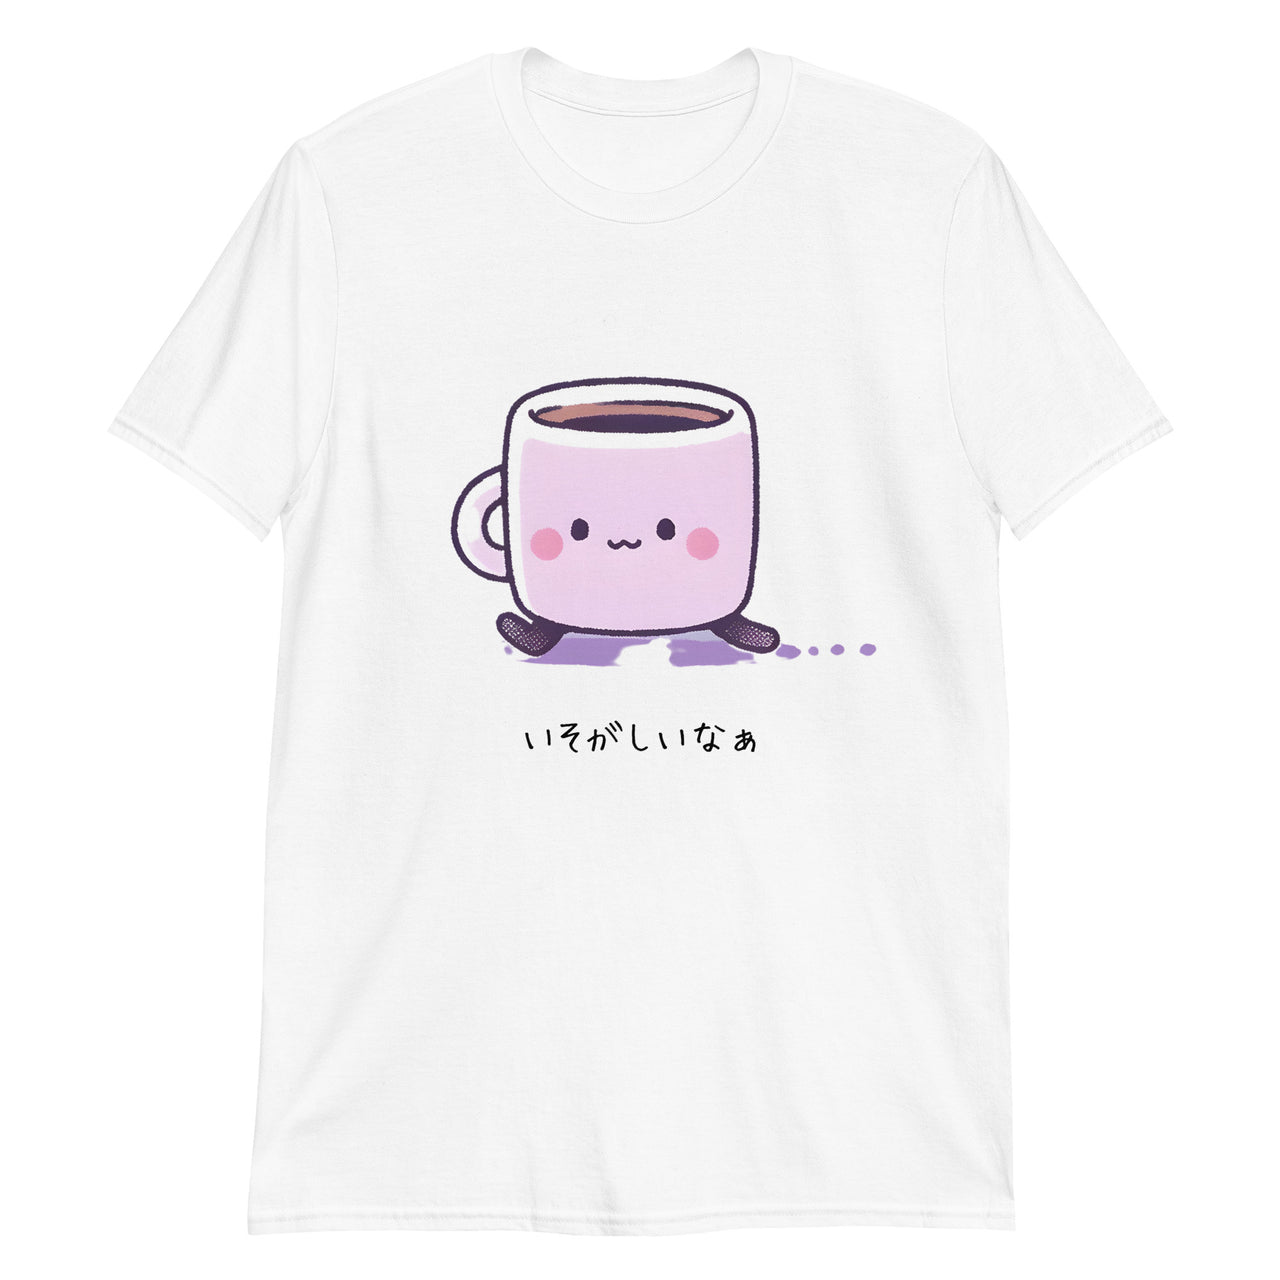 T-Shirts, Mugs, & More